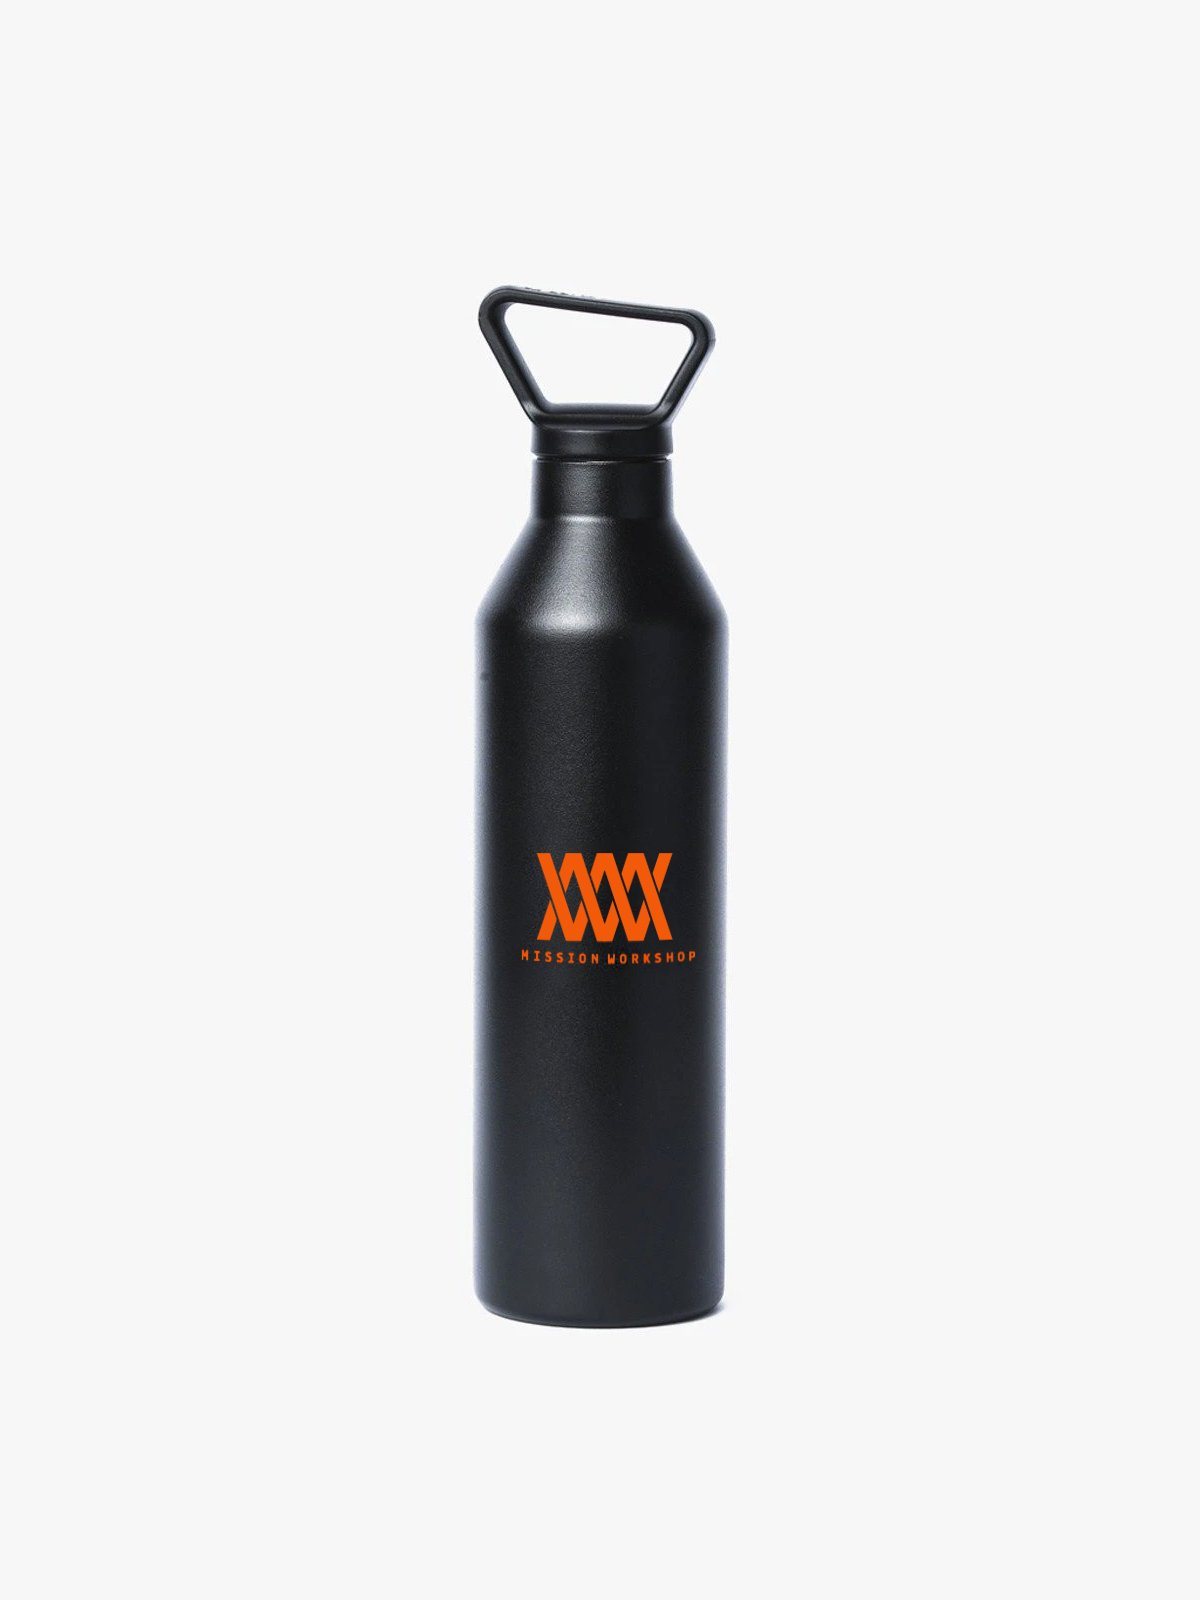 Miir x MW Vacuum Insulated by Mission Workshop - Weatherproof Bags & Technical Apparel - San Francisco & Los Angeles - Construit pour durer - Garanti pour toujours